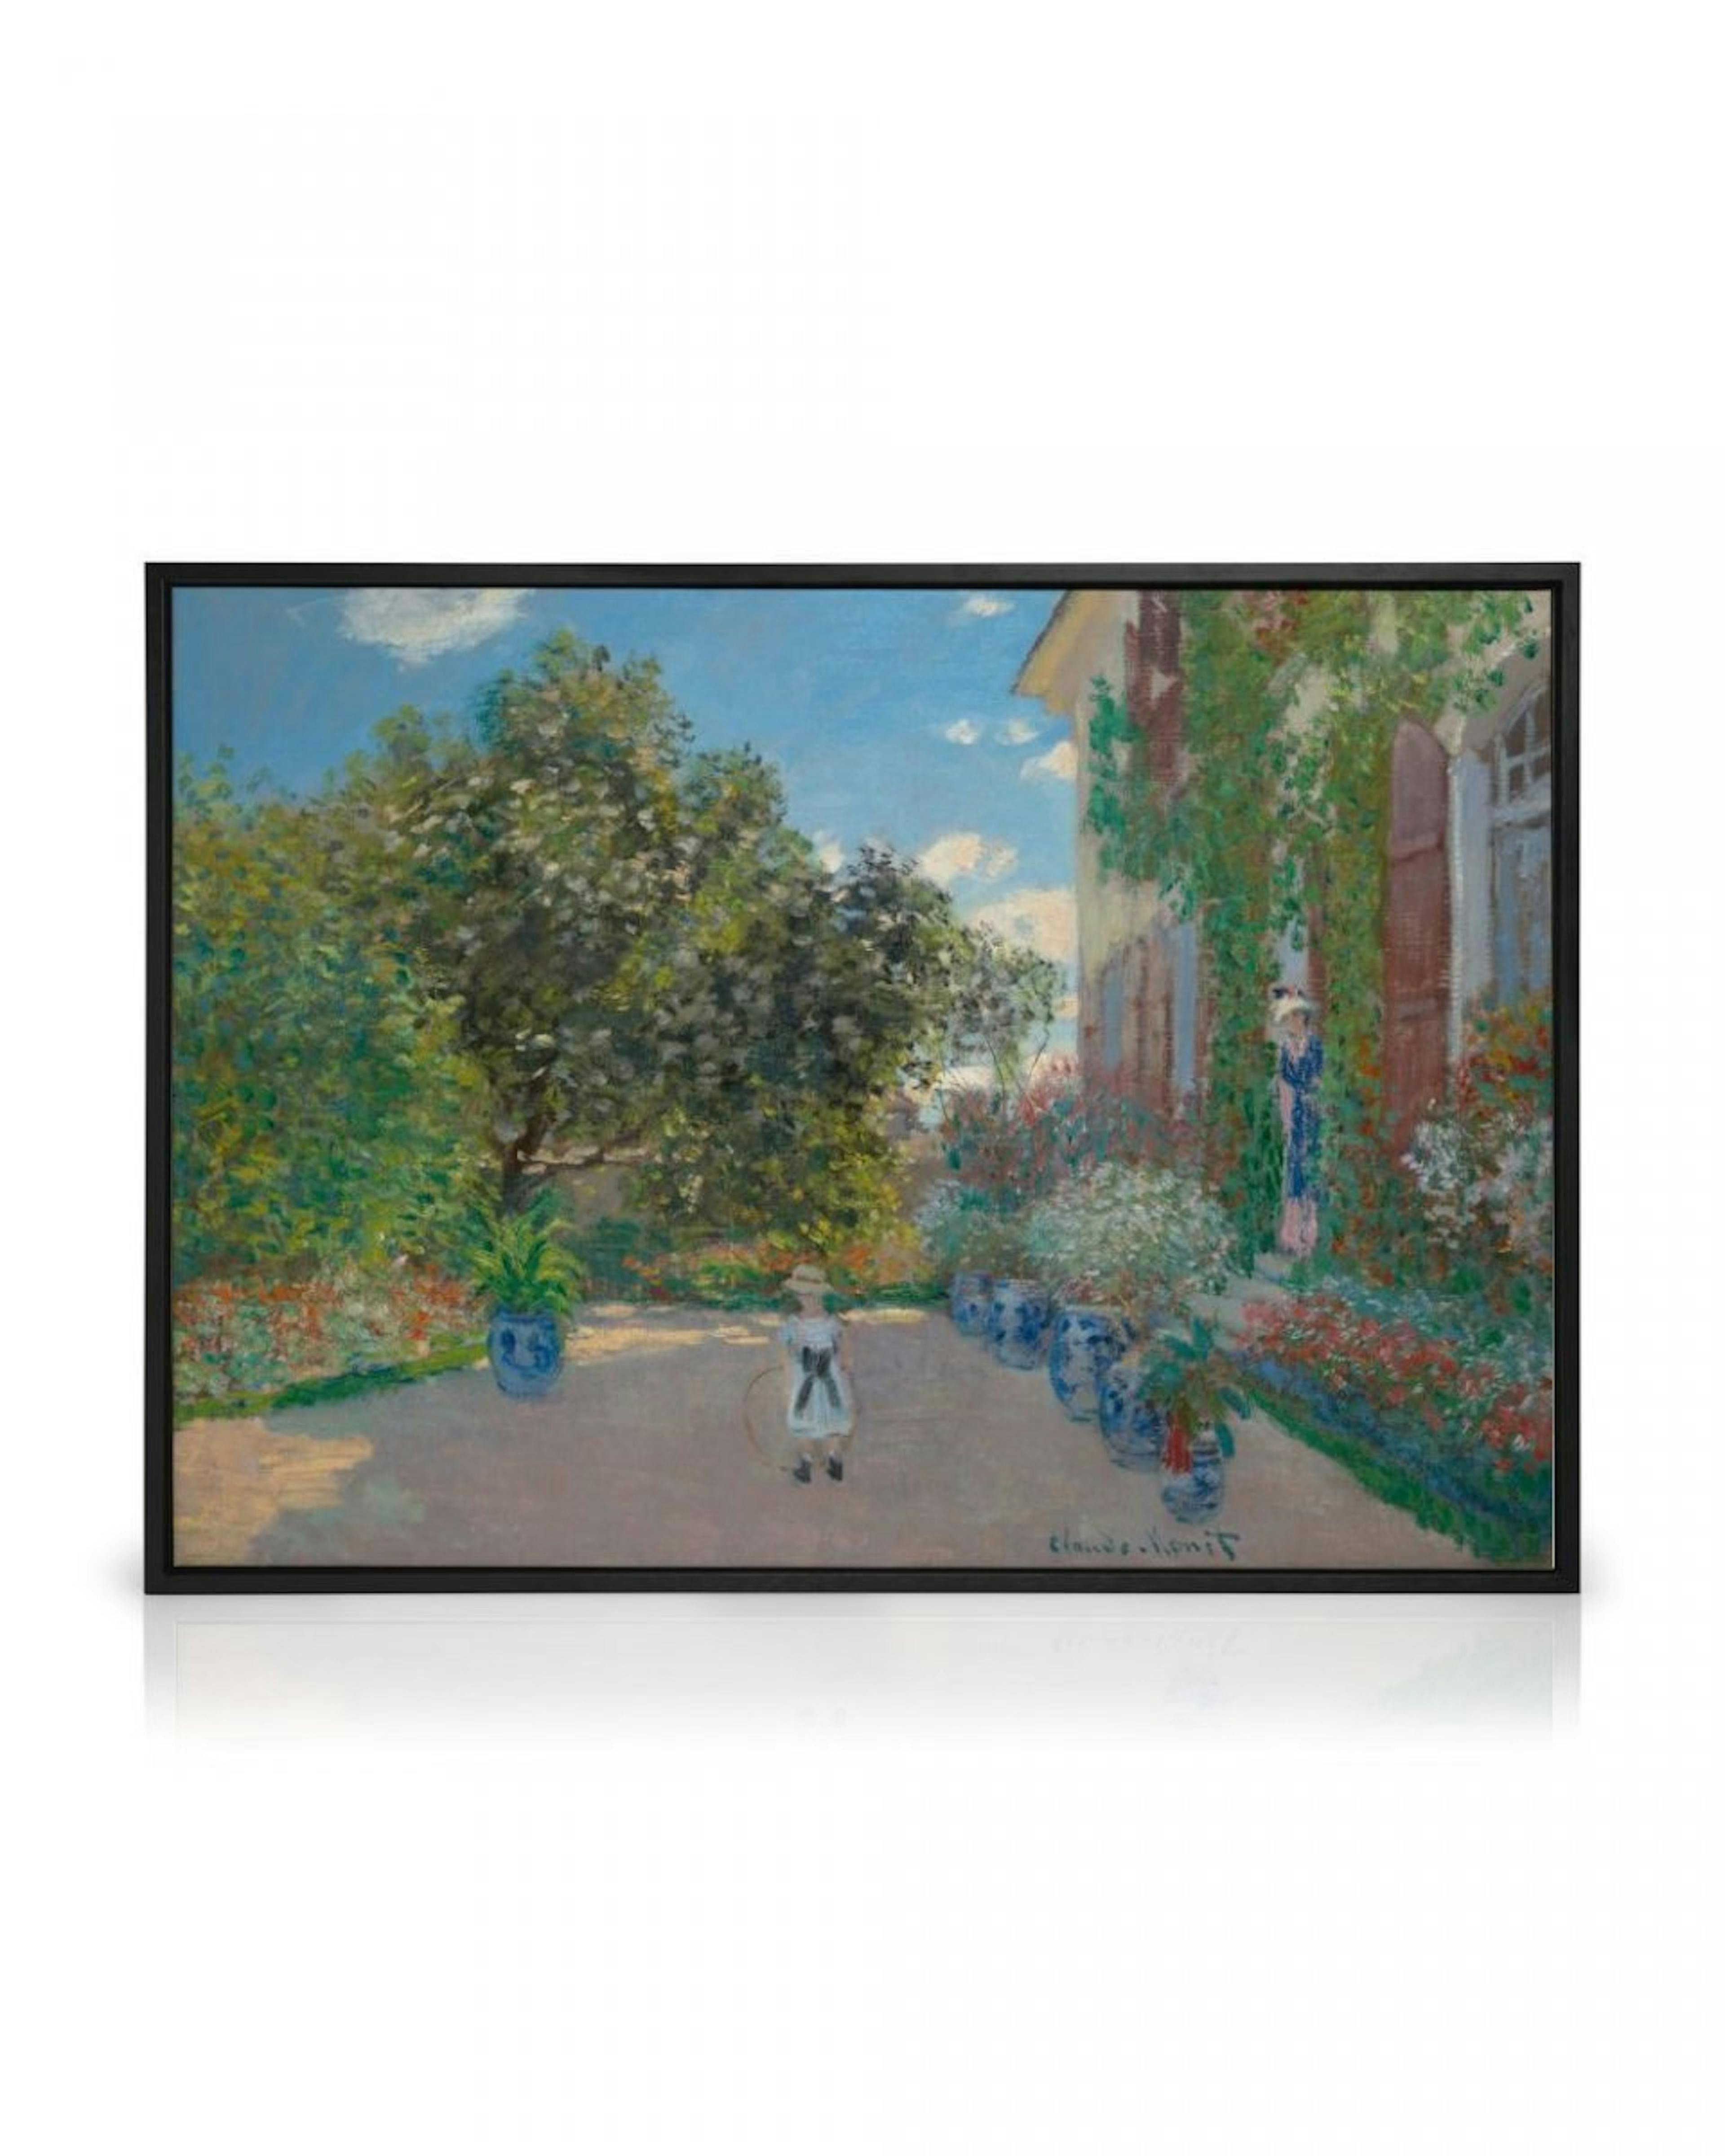 Monet - The Artist’s House at Argenteuil quadro em tela